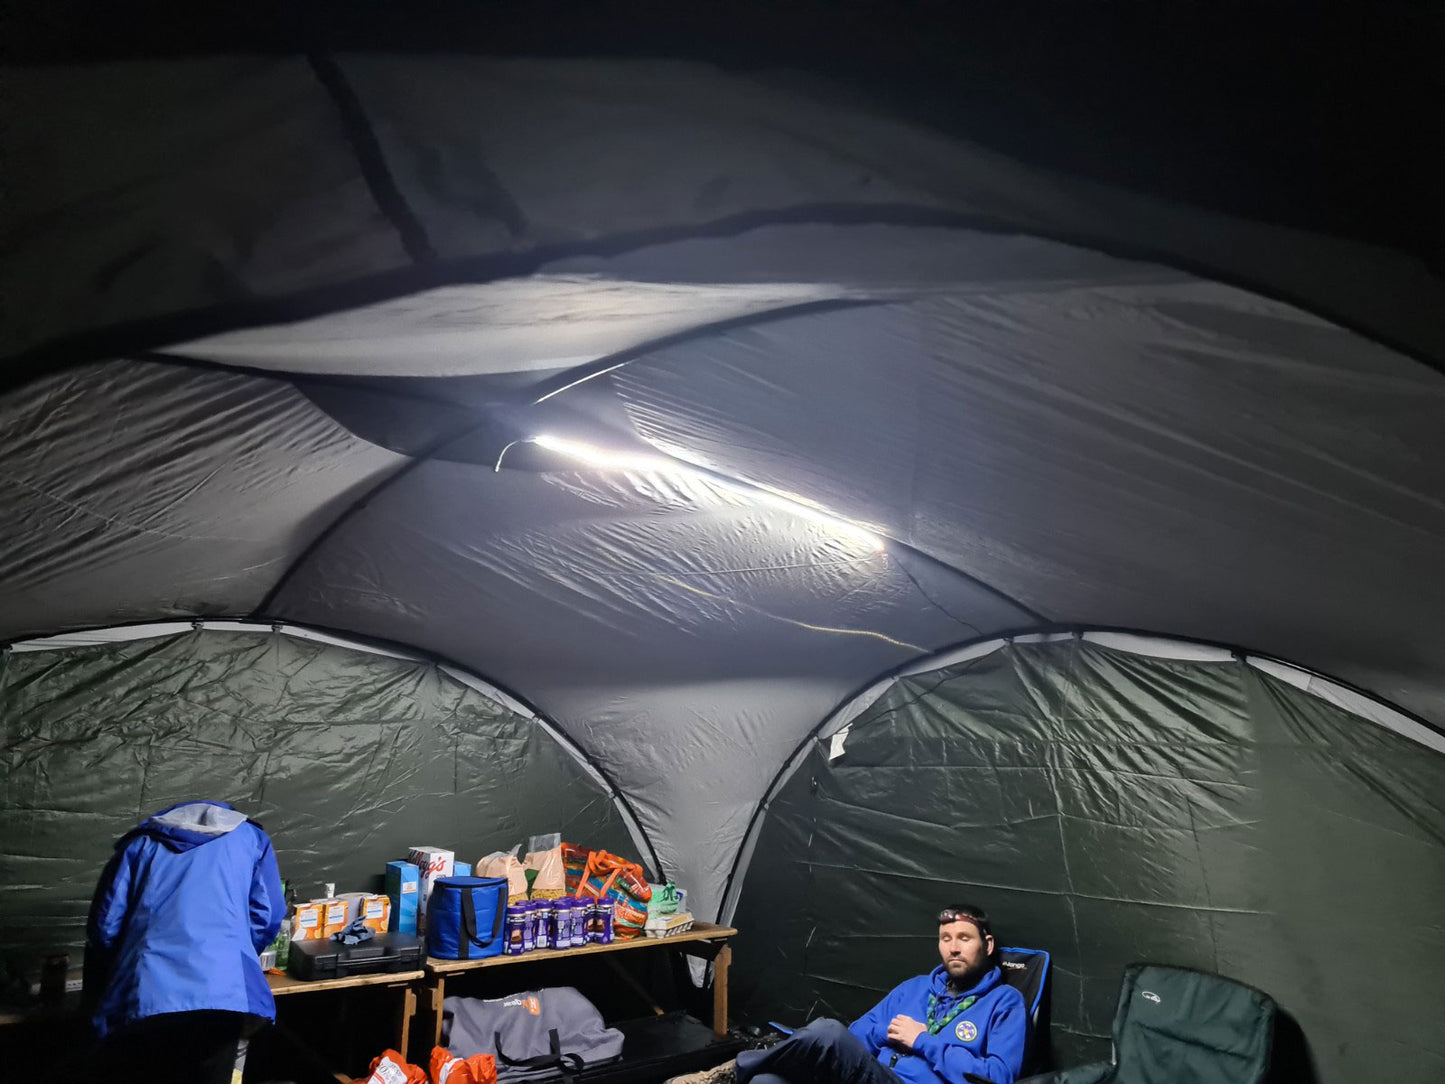 LED Camping Light Flexable